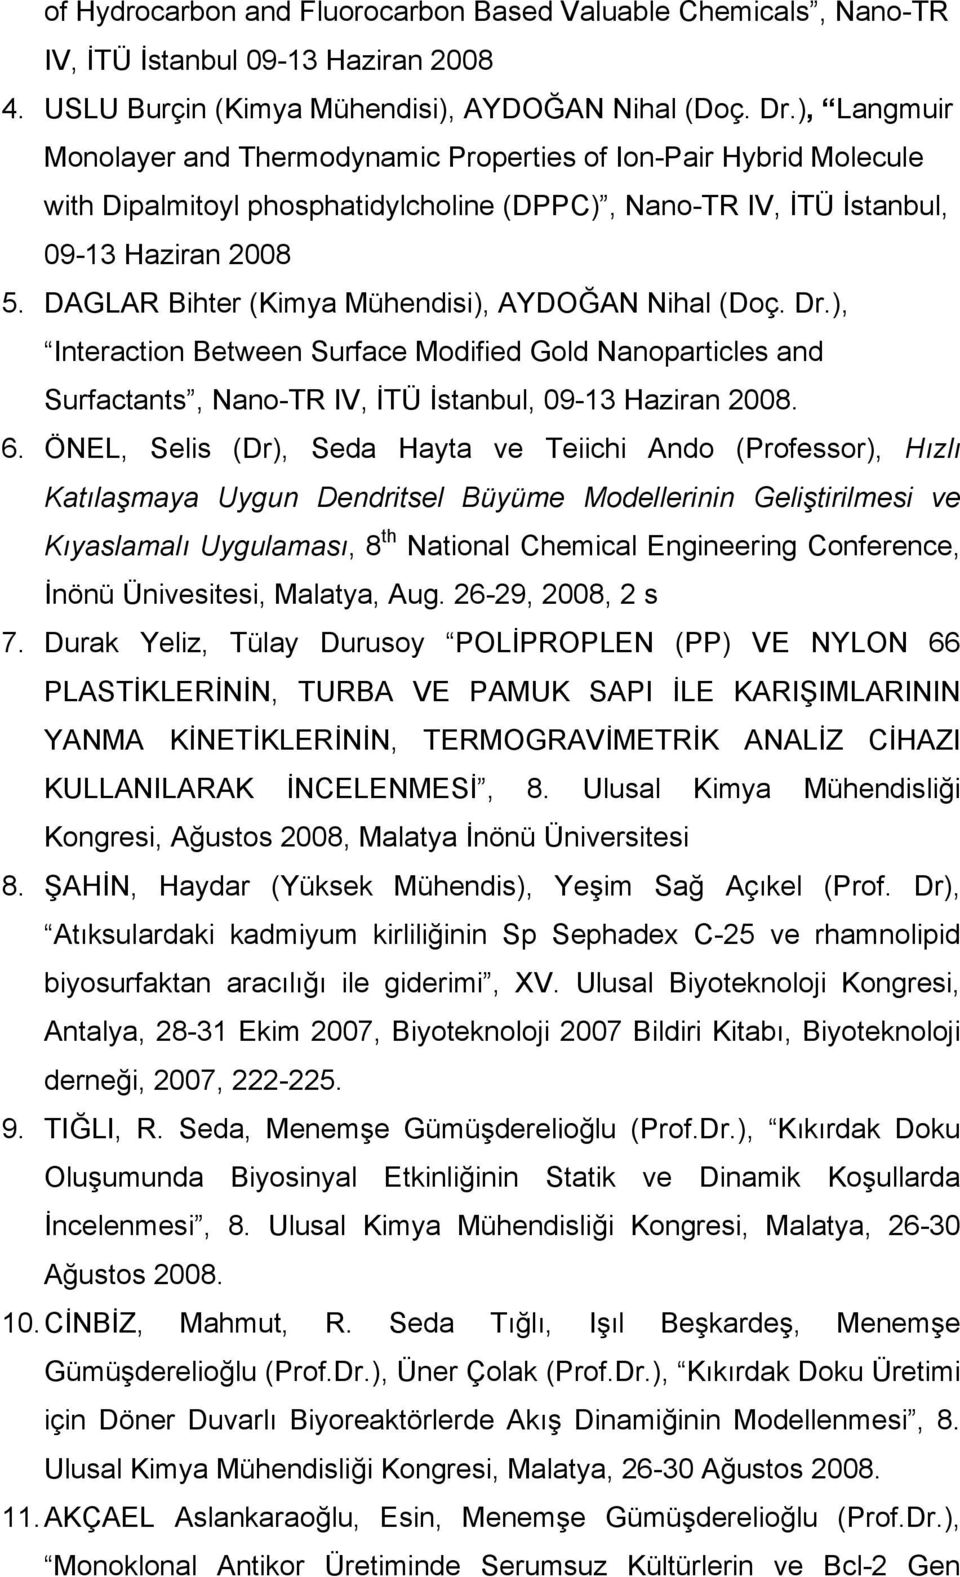 DAGLAR Bihter (Kimya Mühendisi), AYDOĞAN Nihal (Doç. Dr.), Interaction Between Surface Modified Gold Nanoparticles and Surfactants, Nano-TR IV, İTÜ İstanbul, 09-13 Haziran 2008. 6.